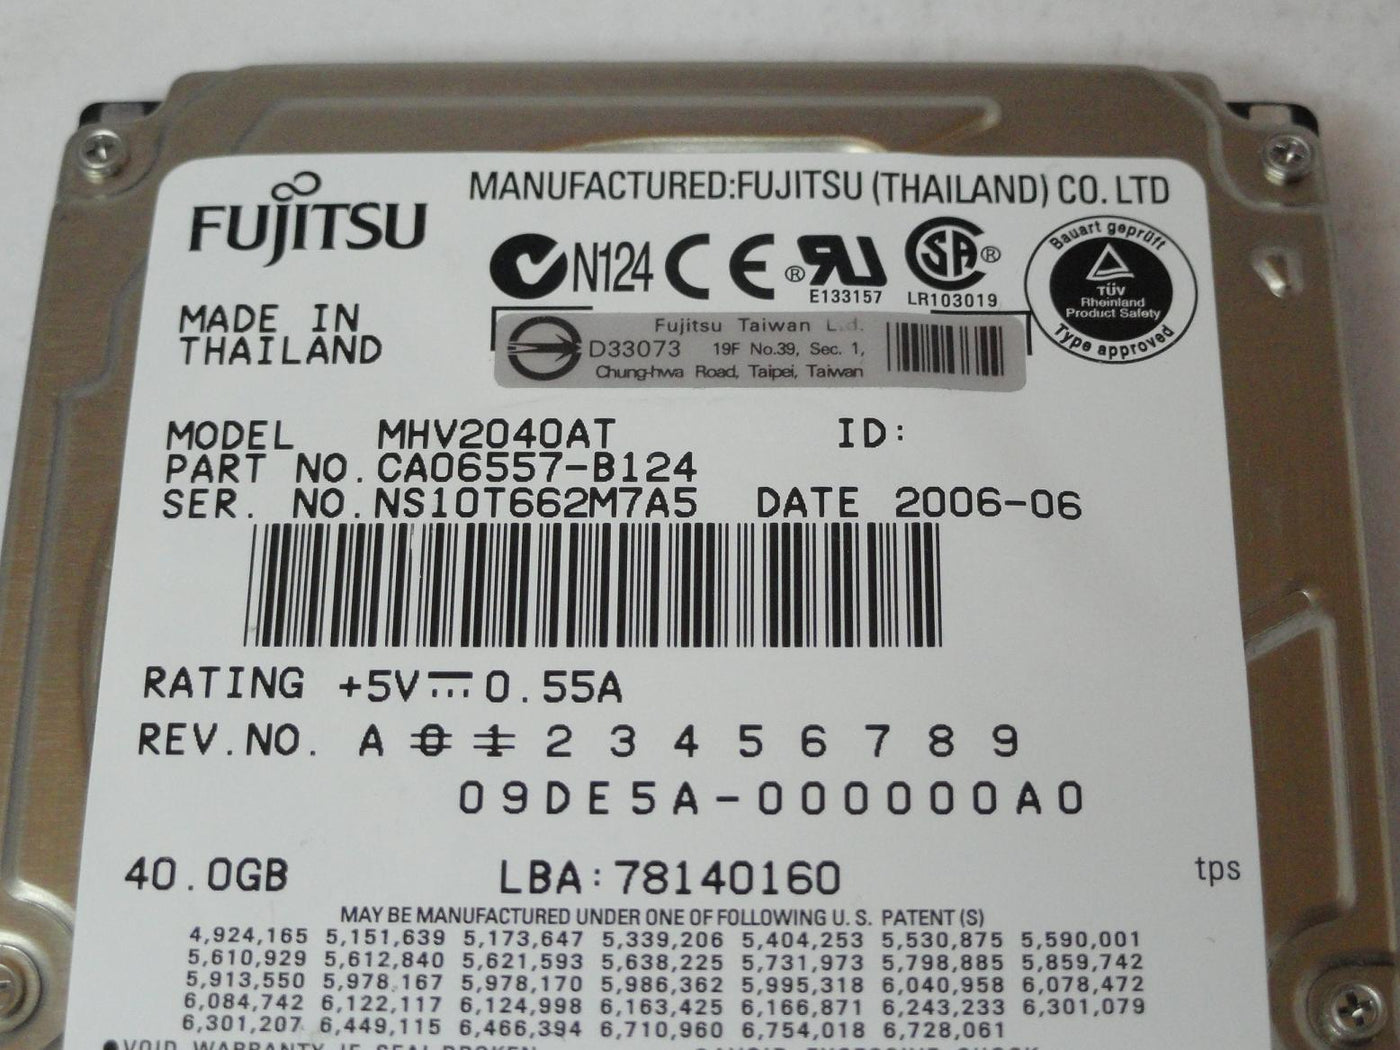 PR17211_CA06557-B124_Fujitsu 40GB IDE 4200rpm 2.5in HDD - Image3